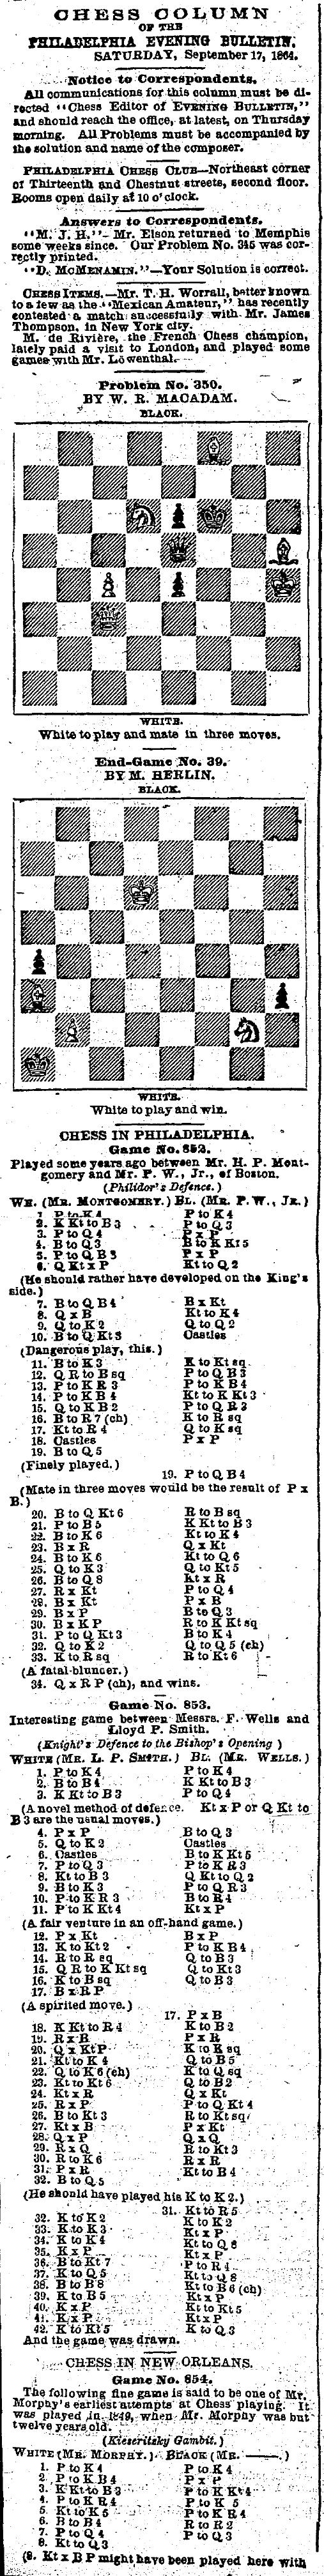 1864.09.17-01 Philadelphia Daily Evening Bulletin.jpg